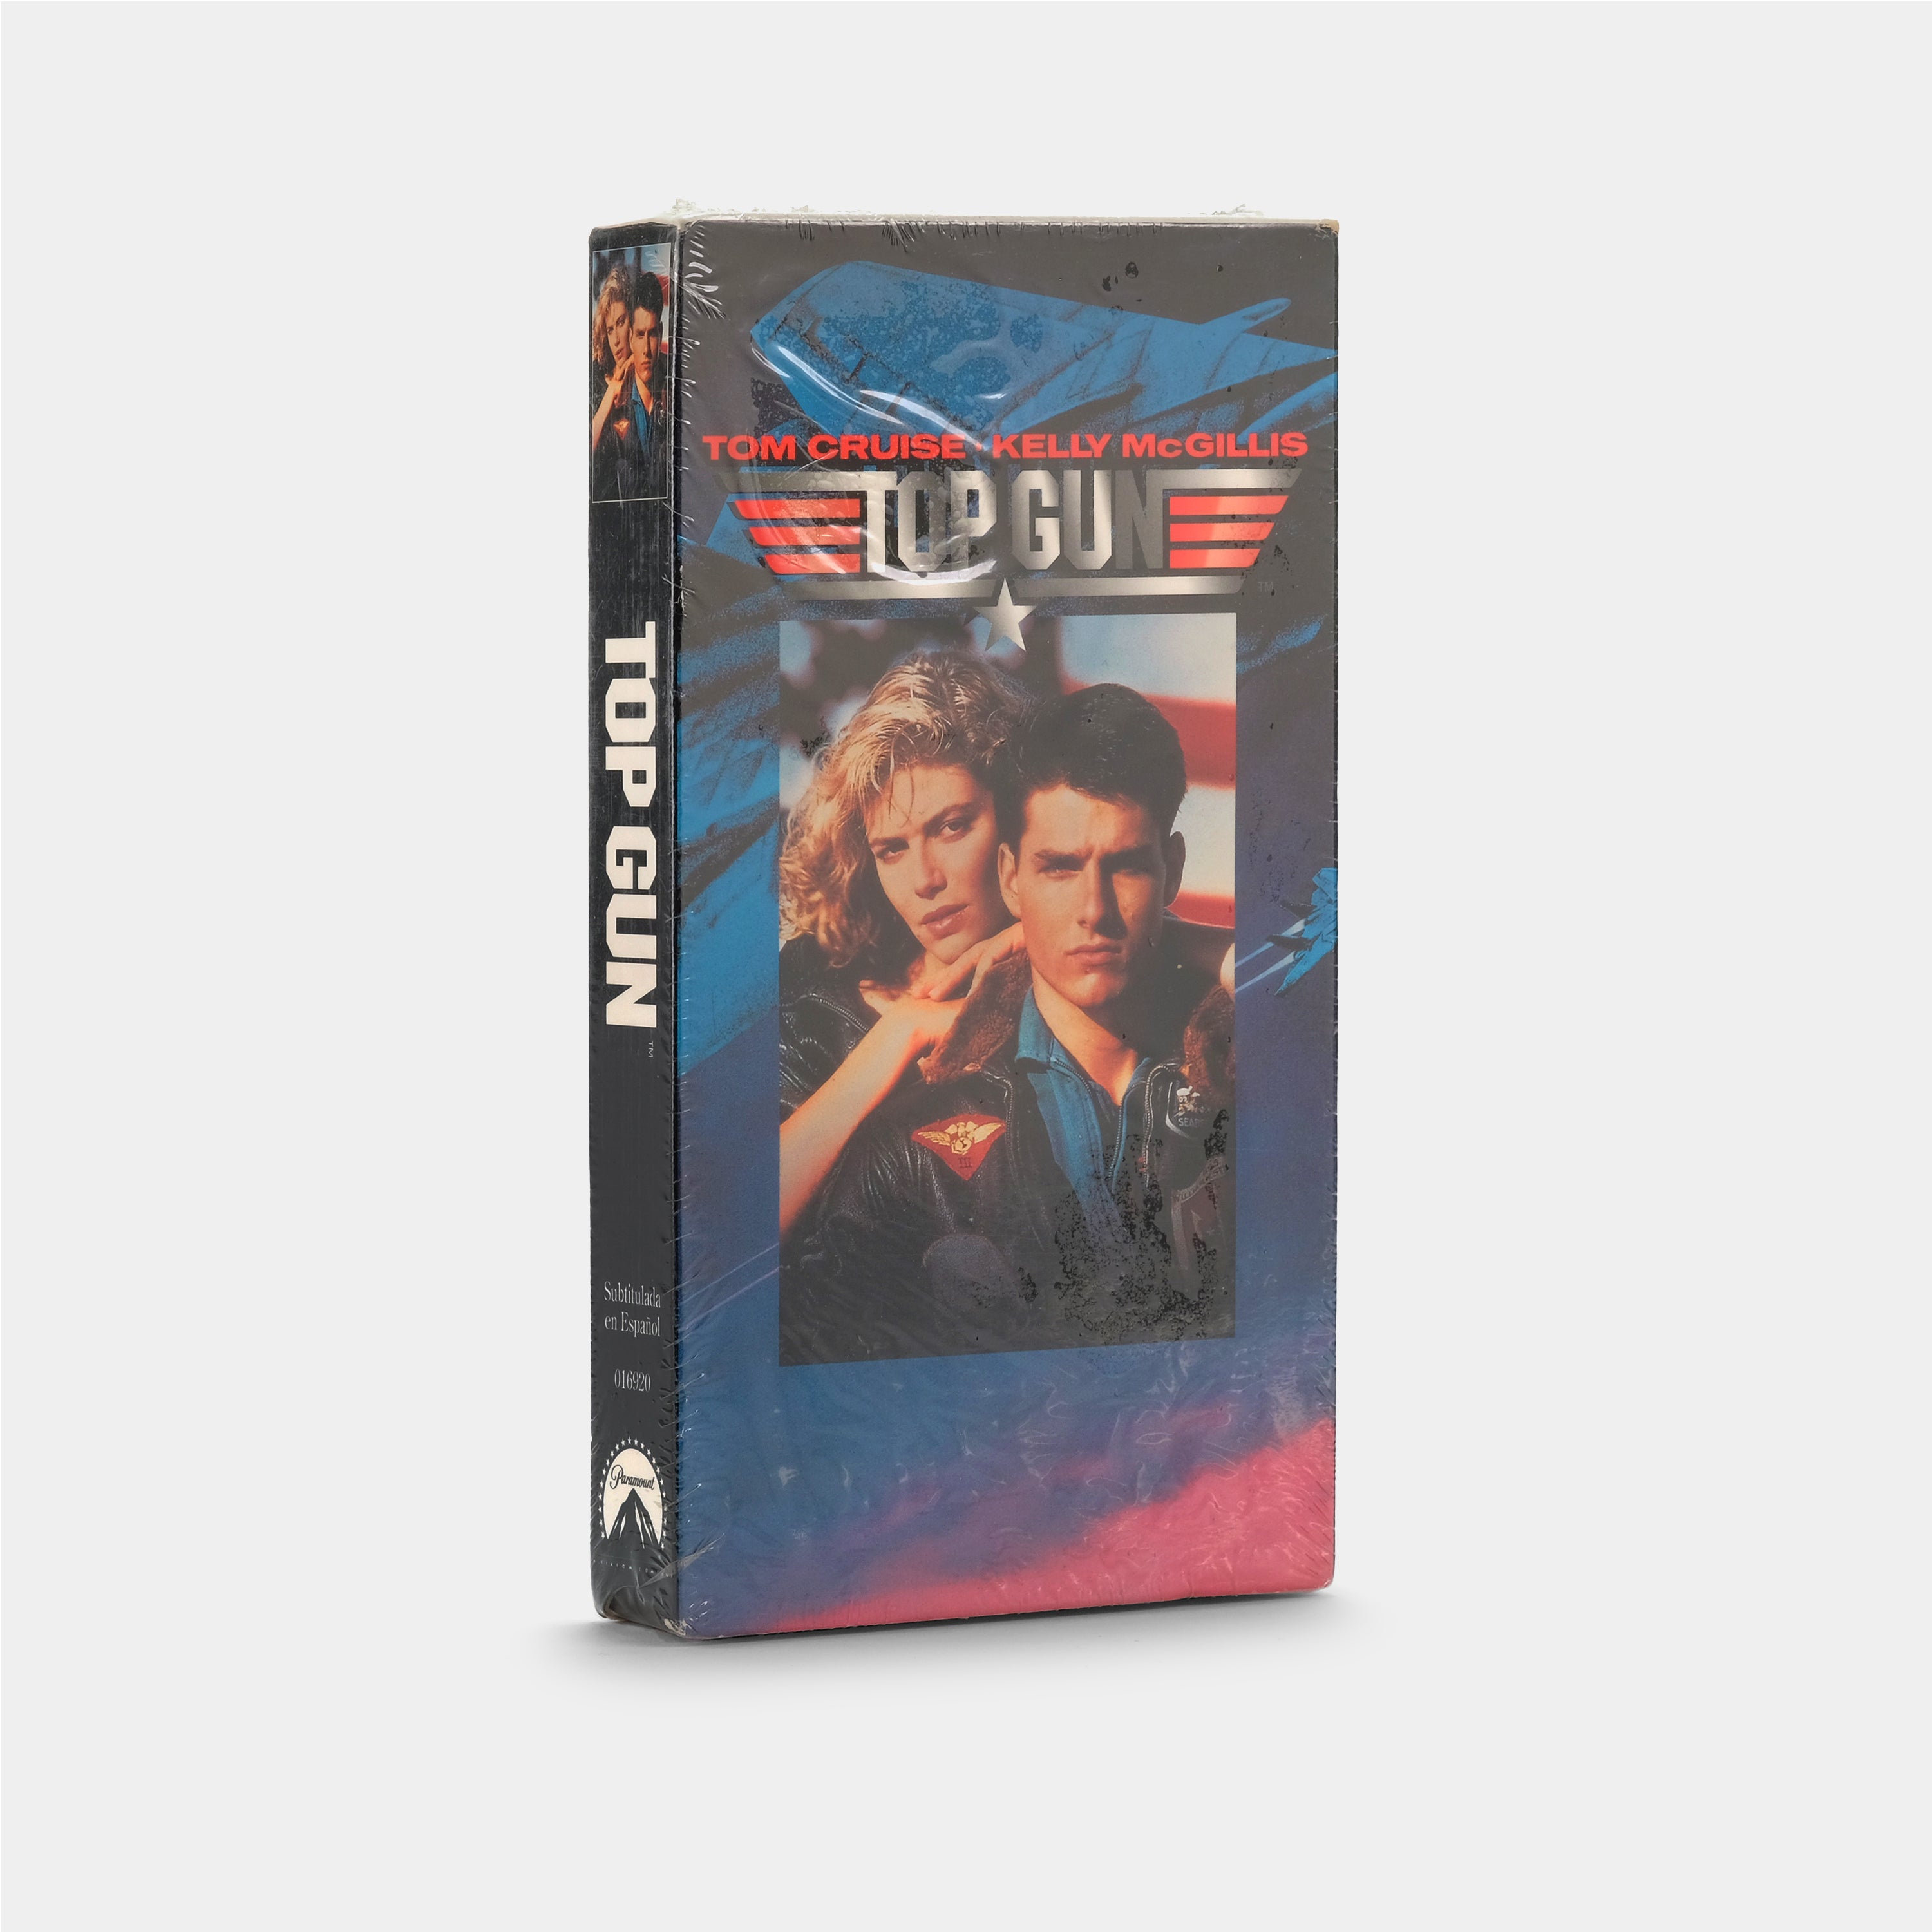 Top Gun (Sealed, Spanish Subtitled) VHS Tape